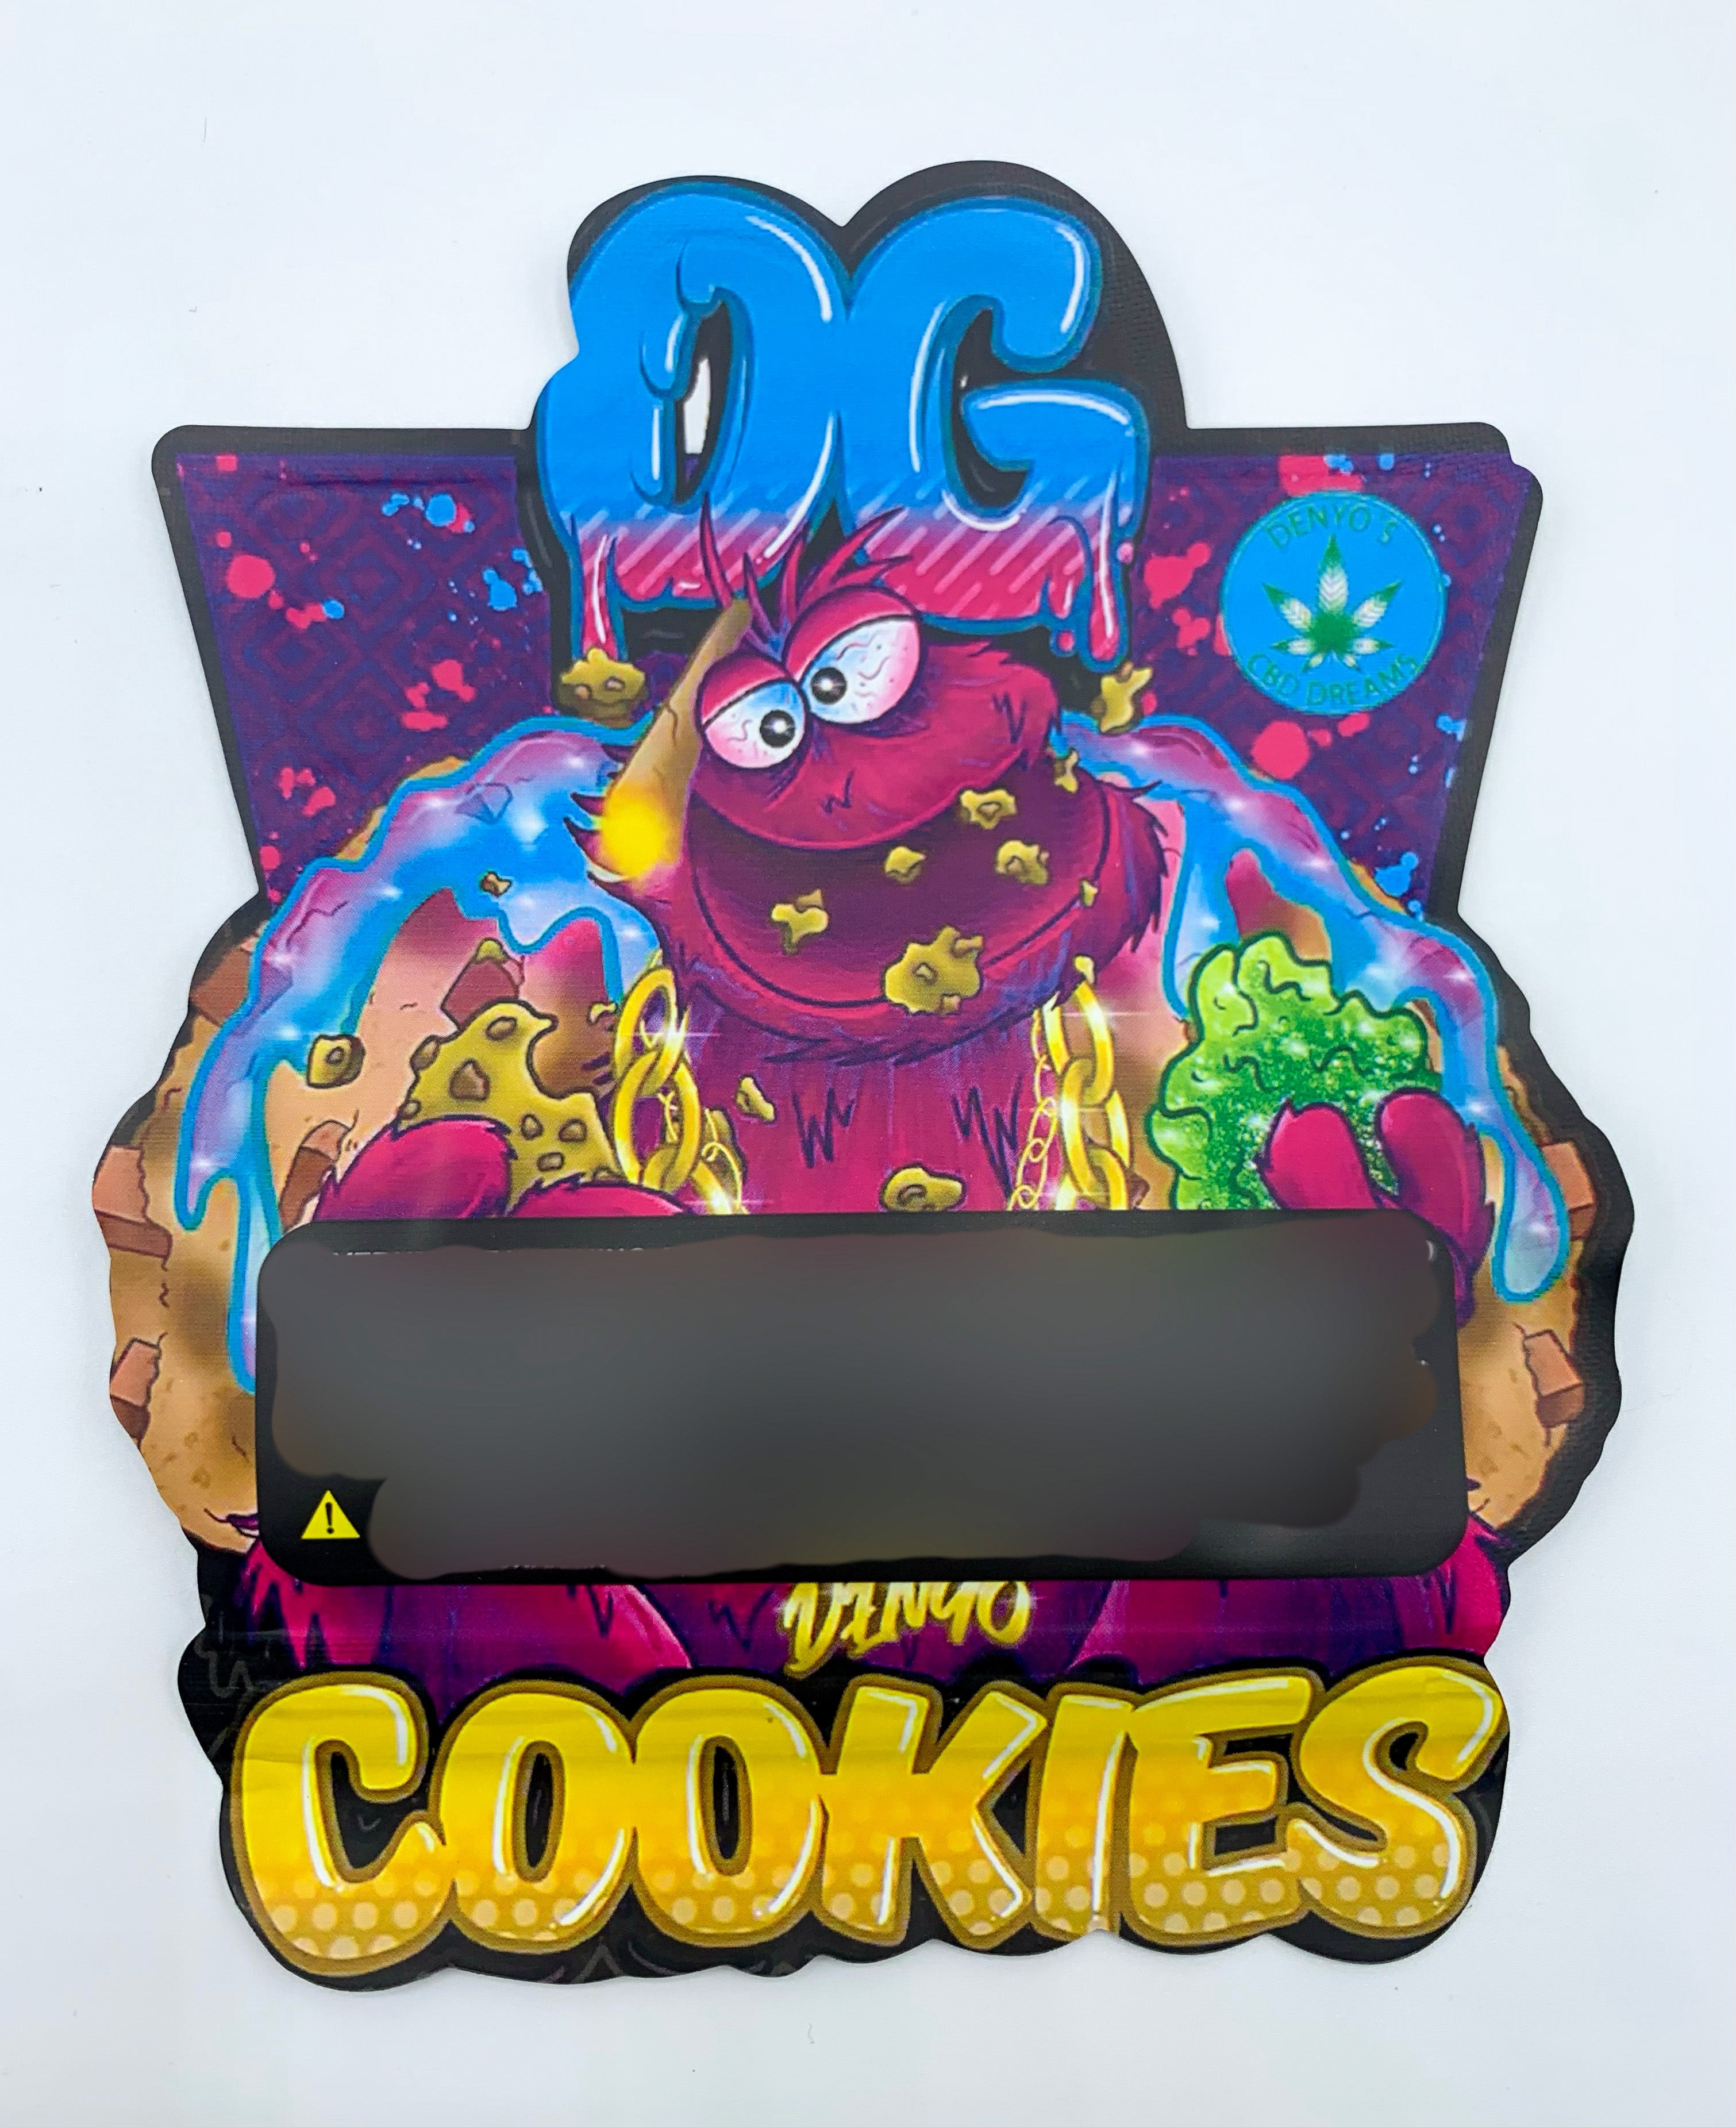 3D Denyo OG Cookies 3.5g Mylar bags